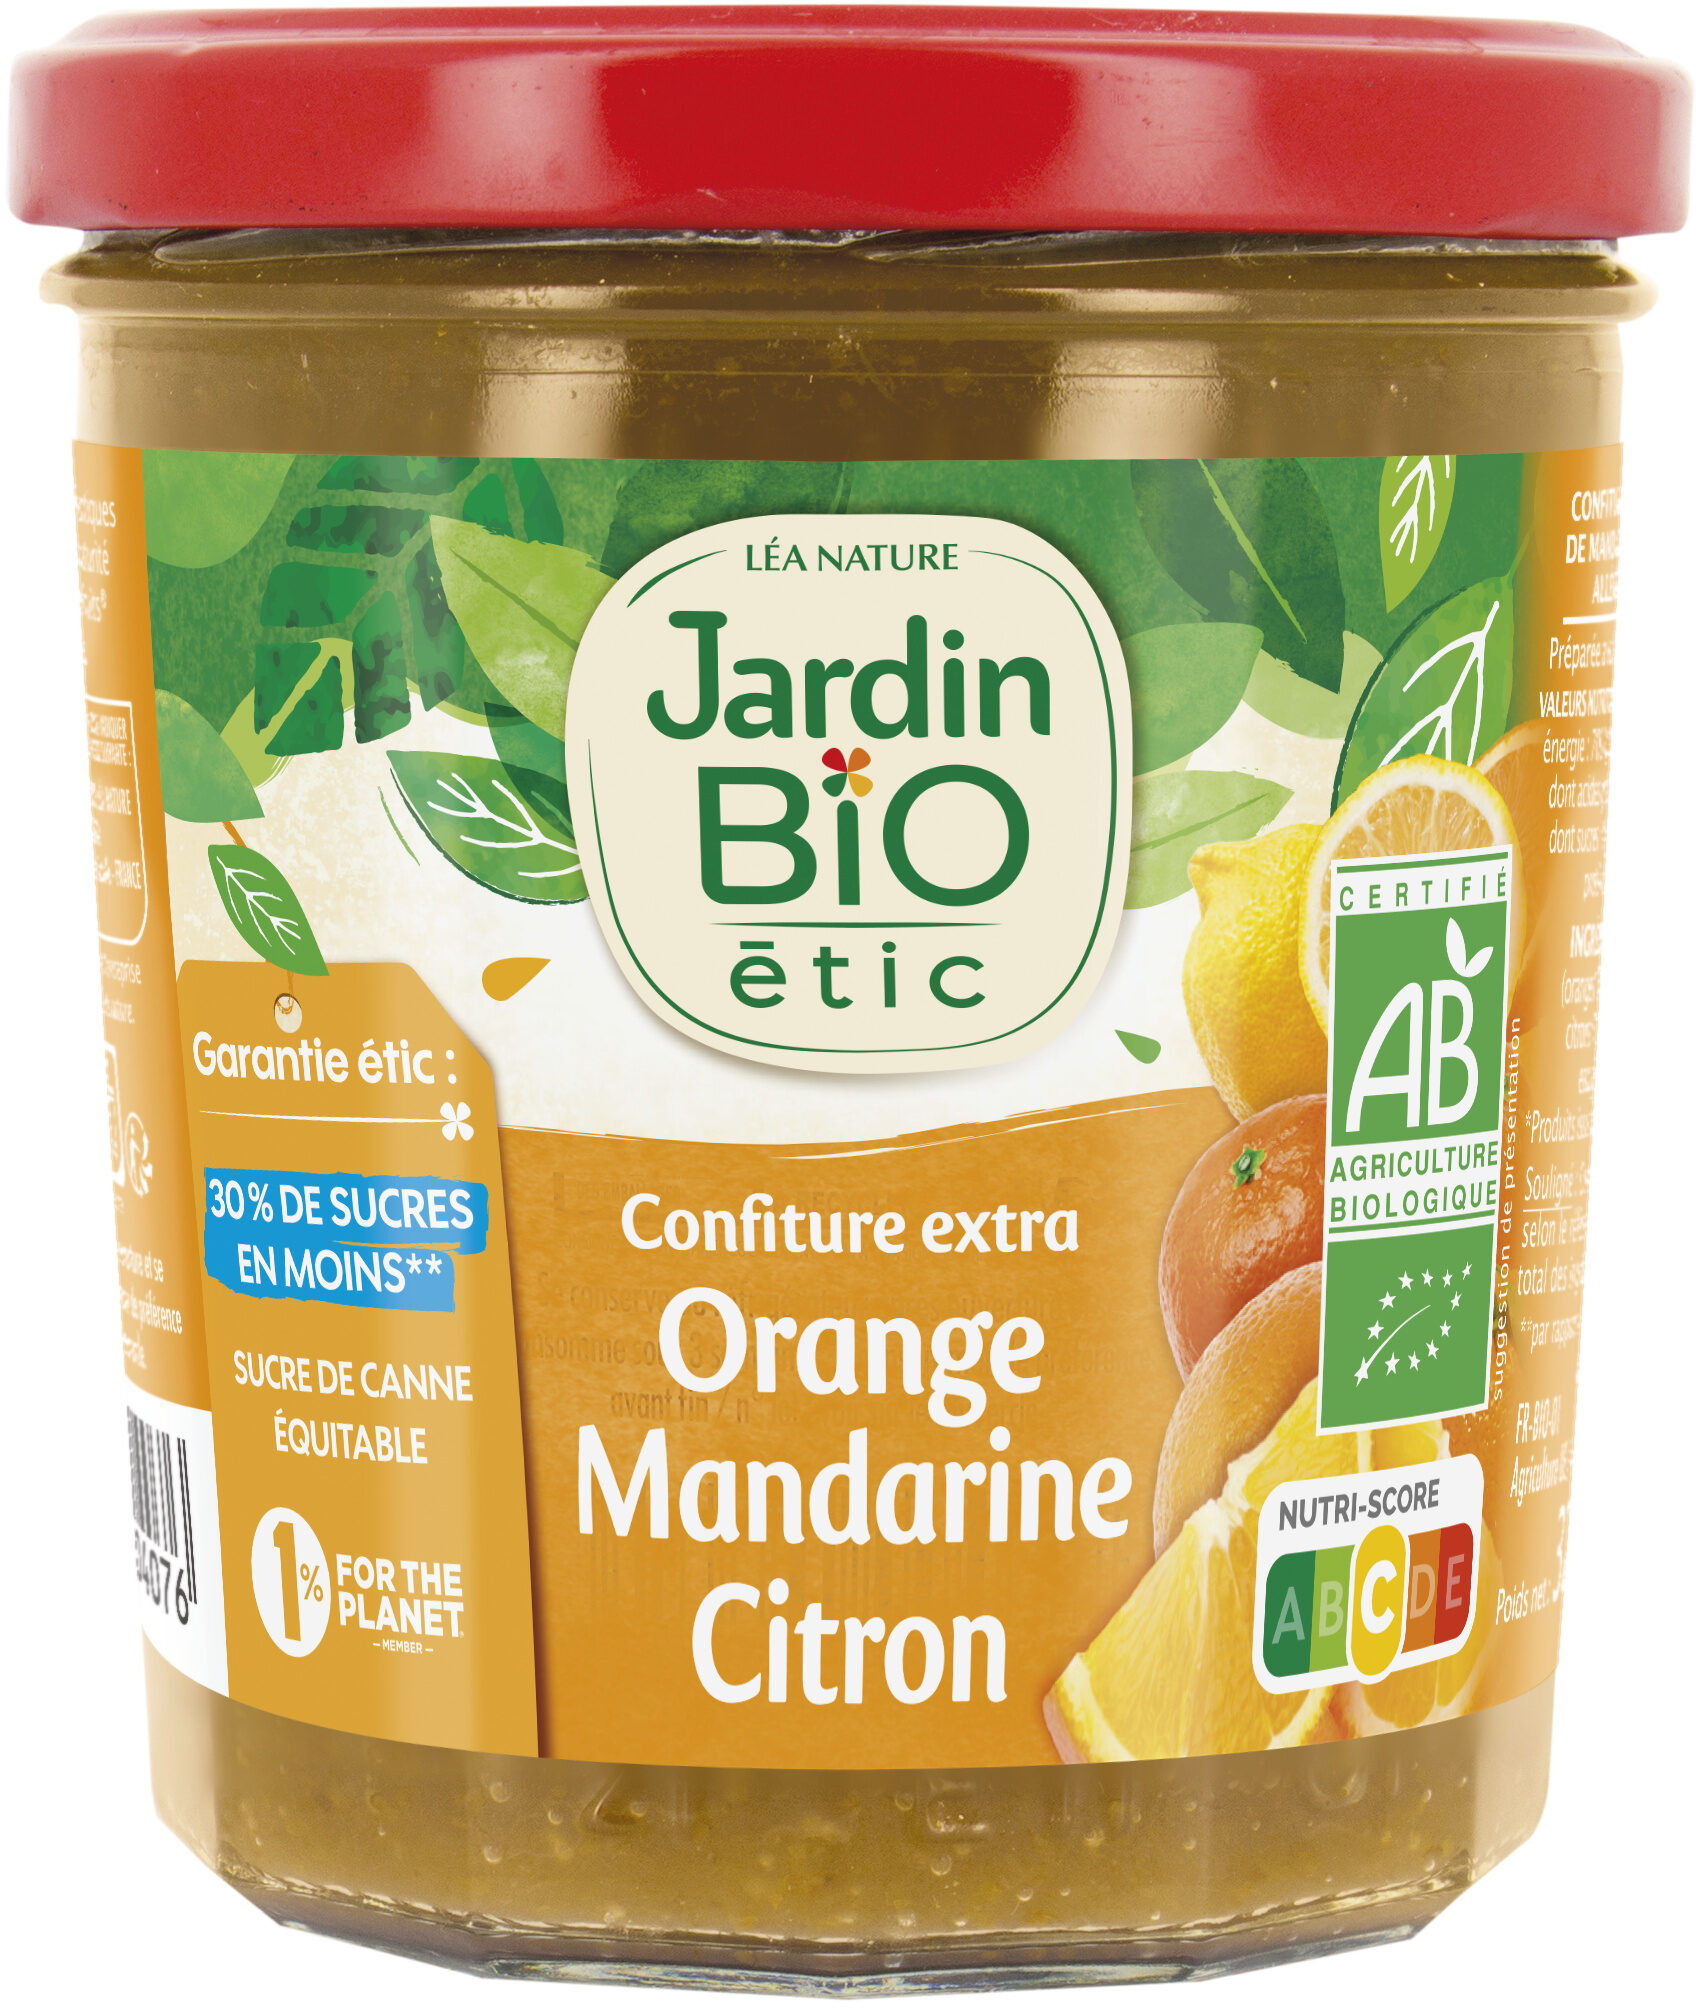 Confiture extra Orange Citron Mandarine - Product - fr